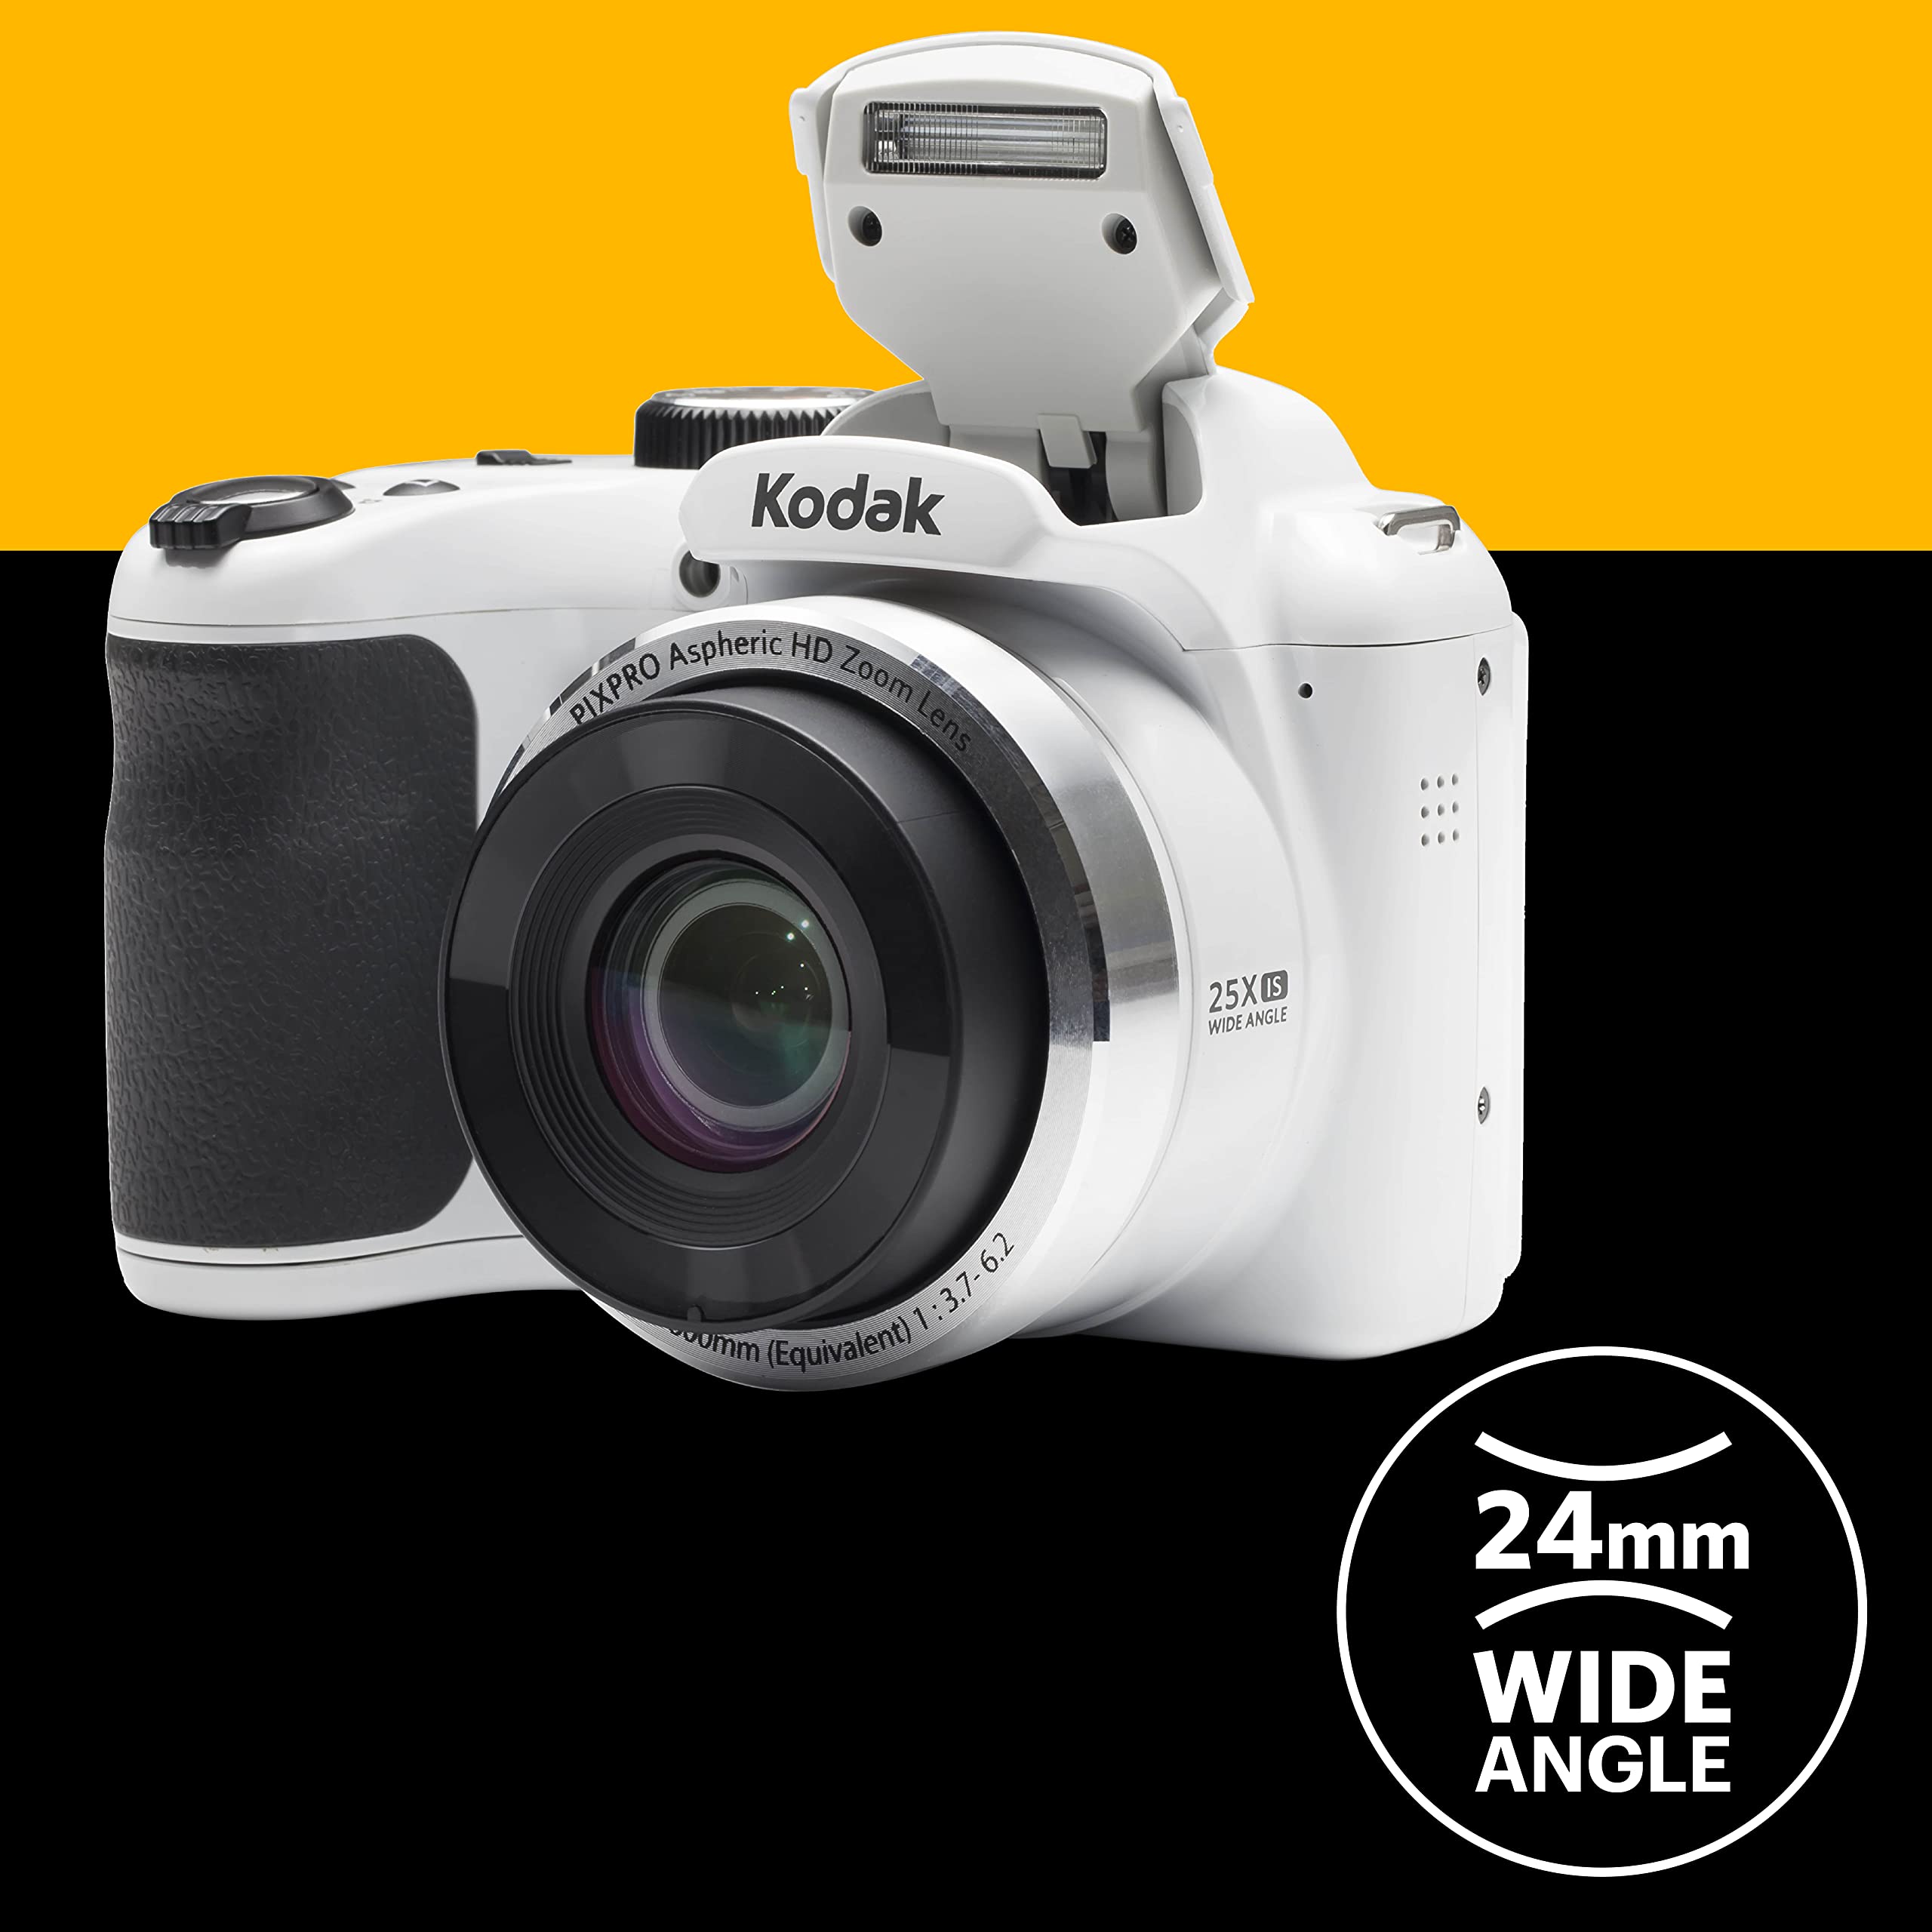 Kodak PIXPRO Astro Zoom AZ252-WH 16MP Digital Camera with 25X Optical Zoom and 3